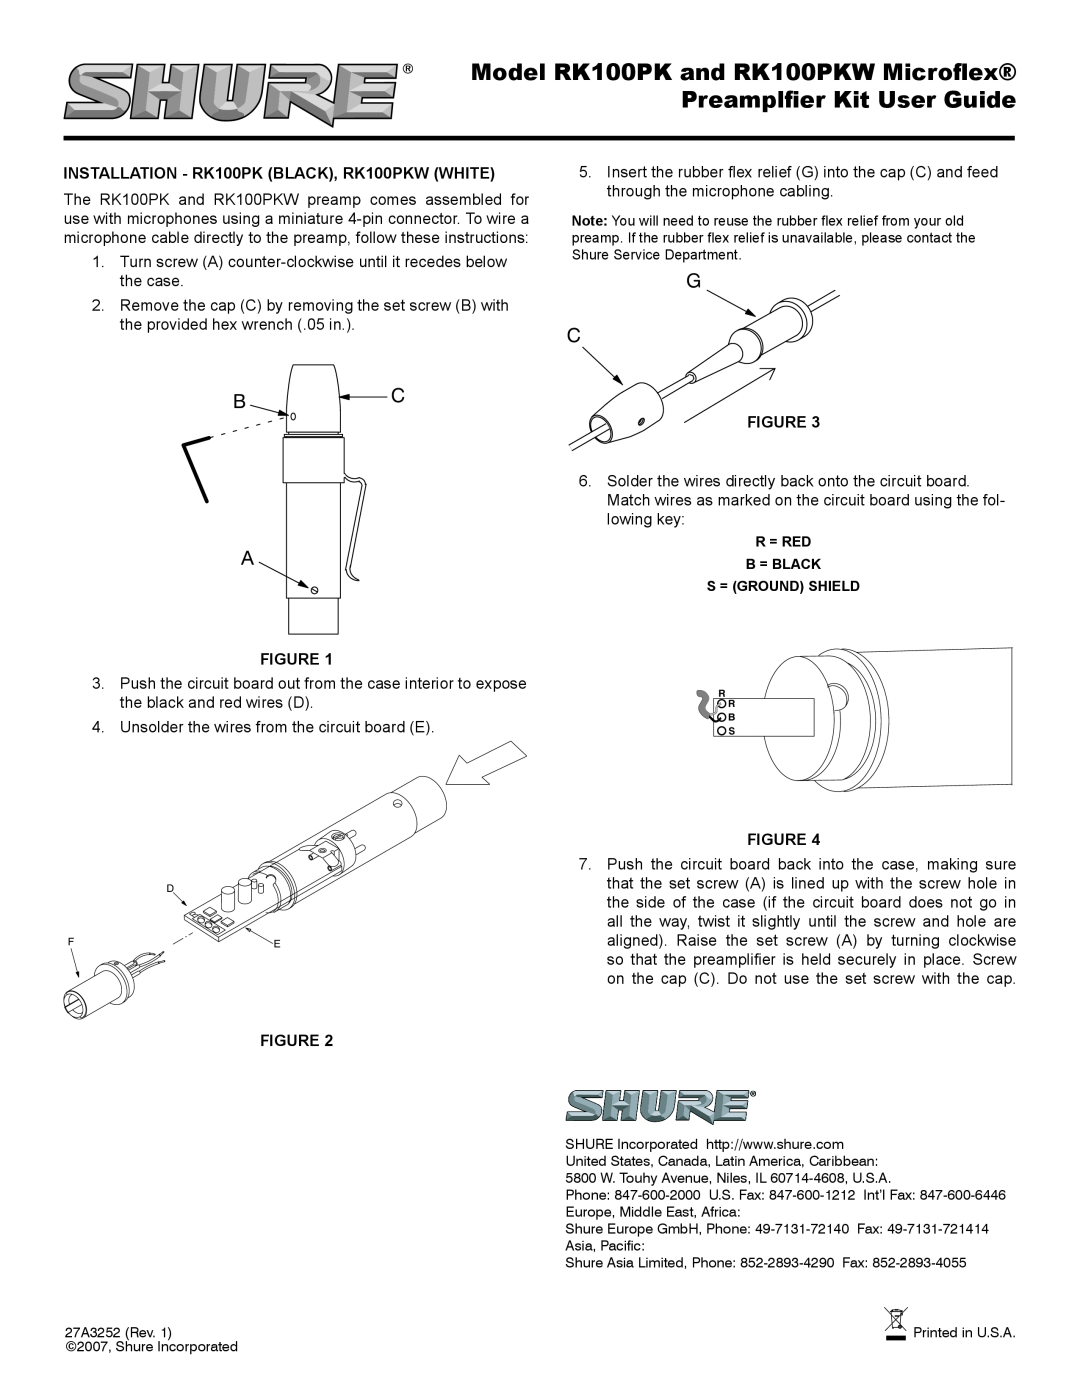 Shure manual Model RK100PK and RK100PKW Microflex Preamplfier Kit User Guide, B C A 